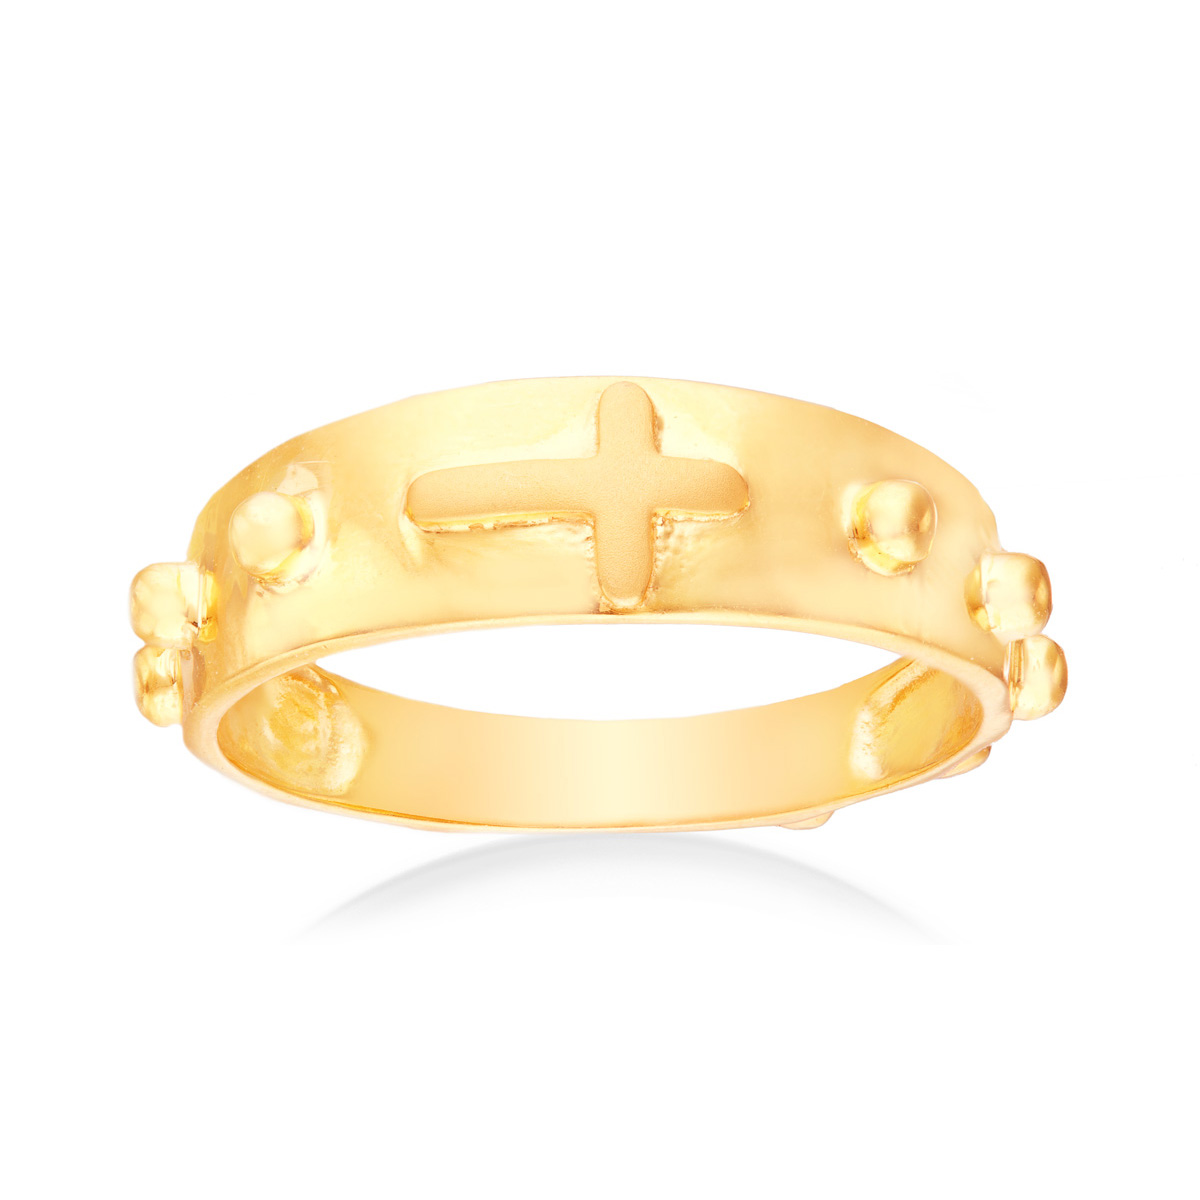 Christian Ring